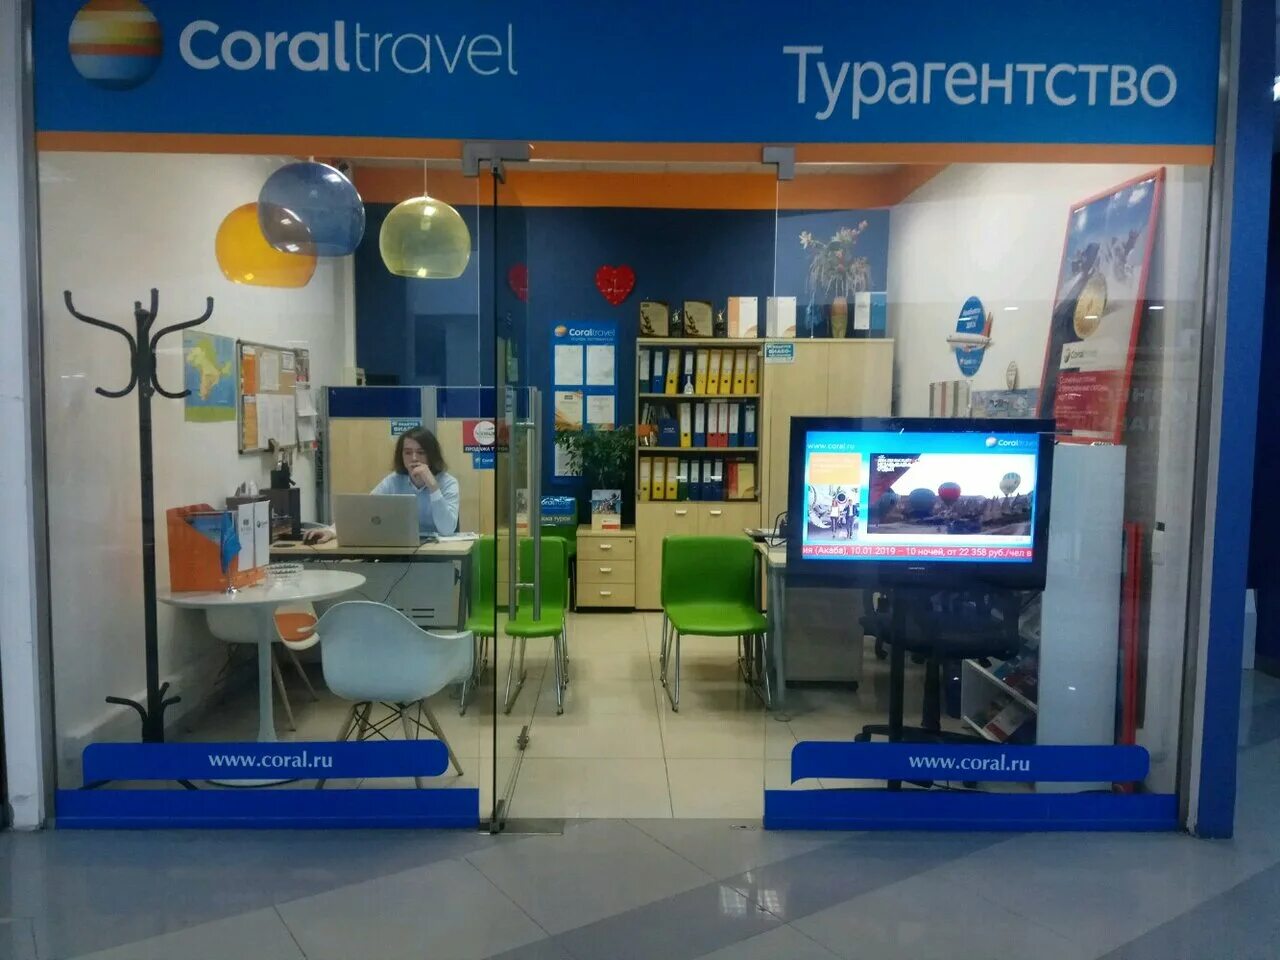 1 coral travel. Корал Тревел турагентство. Coral Travel турагентство. Coral Travel вывеска. Coral Travel Moscow.